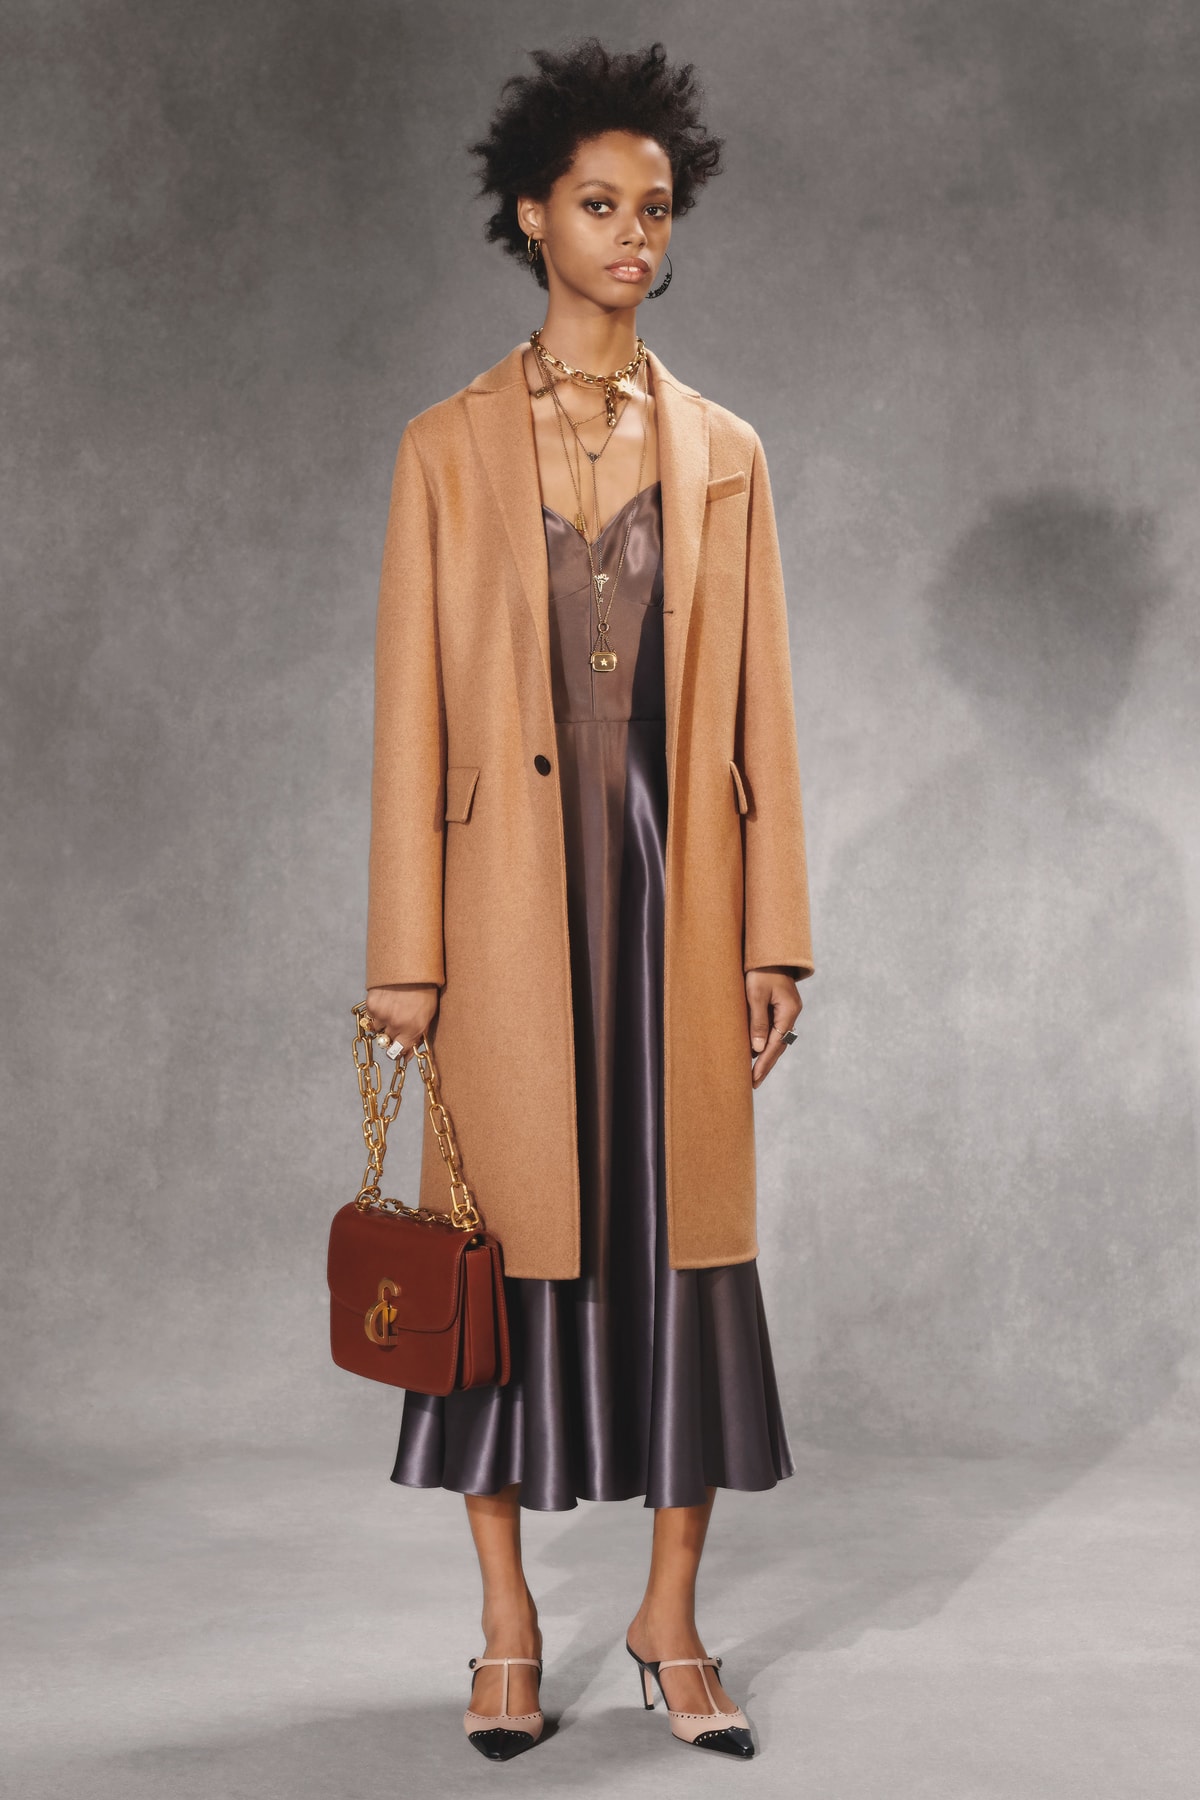 Dior Fall 2018 Collection Lookbook Silk Dress Wool Coat Leather Bag Grey Tan Brown